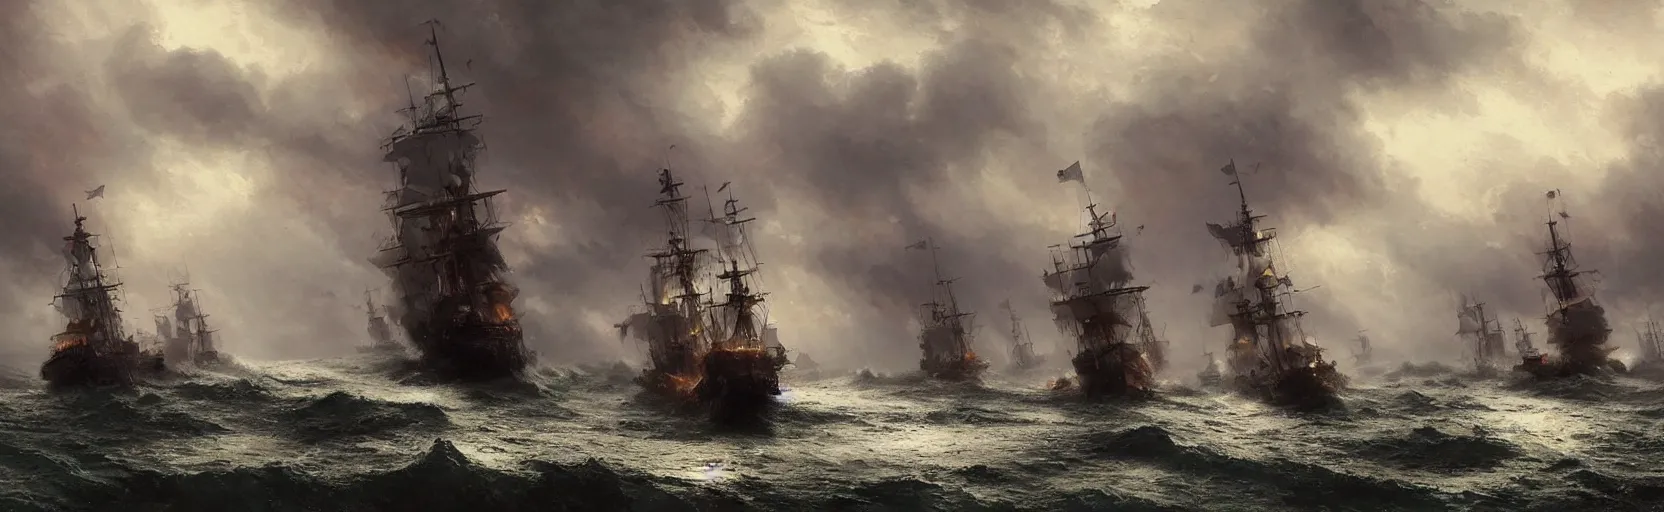 Prompt: battle of multiple pirate war ships in the sea, in rain and thunderstorm, ominous sky, by greg rutkowski, thomas kinkade, artstation